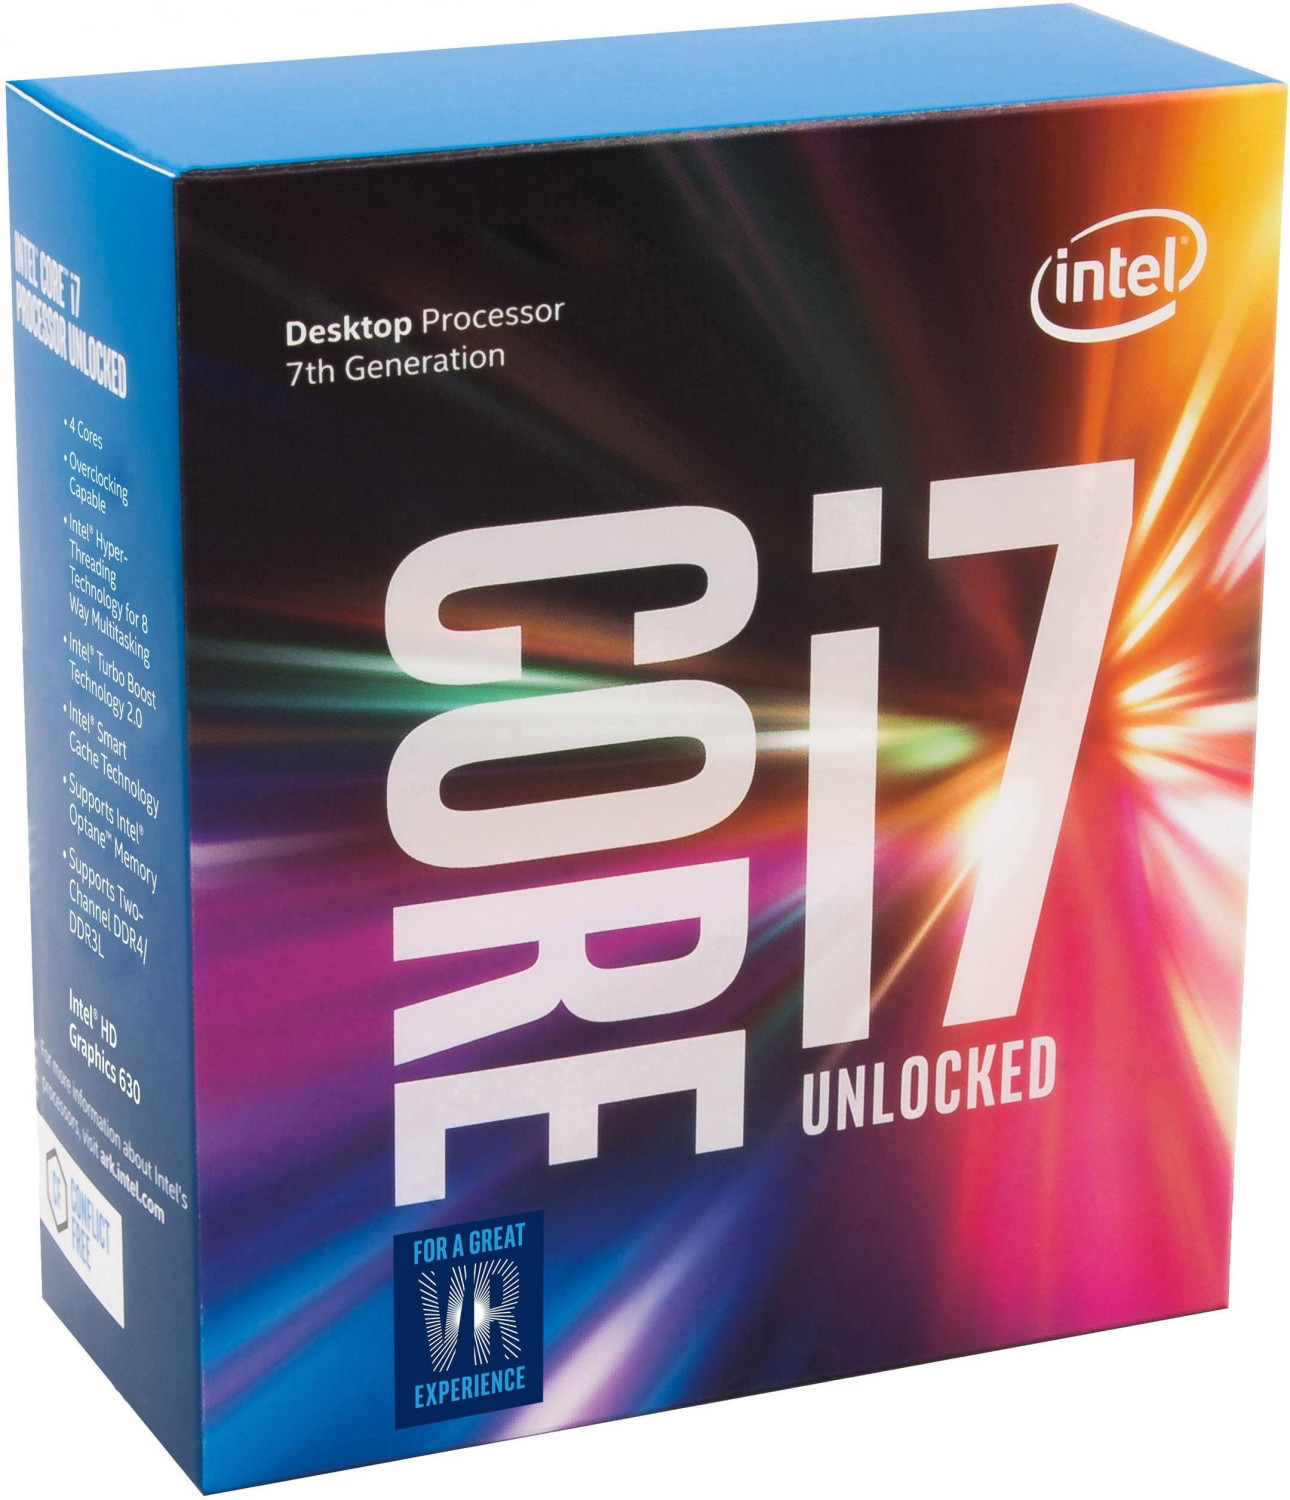 Intel Core i7-7700K Box WOF (Sockel 1151, 14nm, BX80677I77700K)